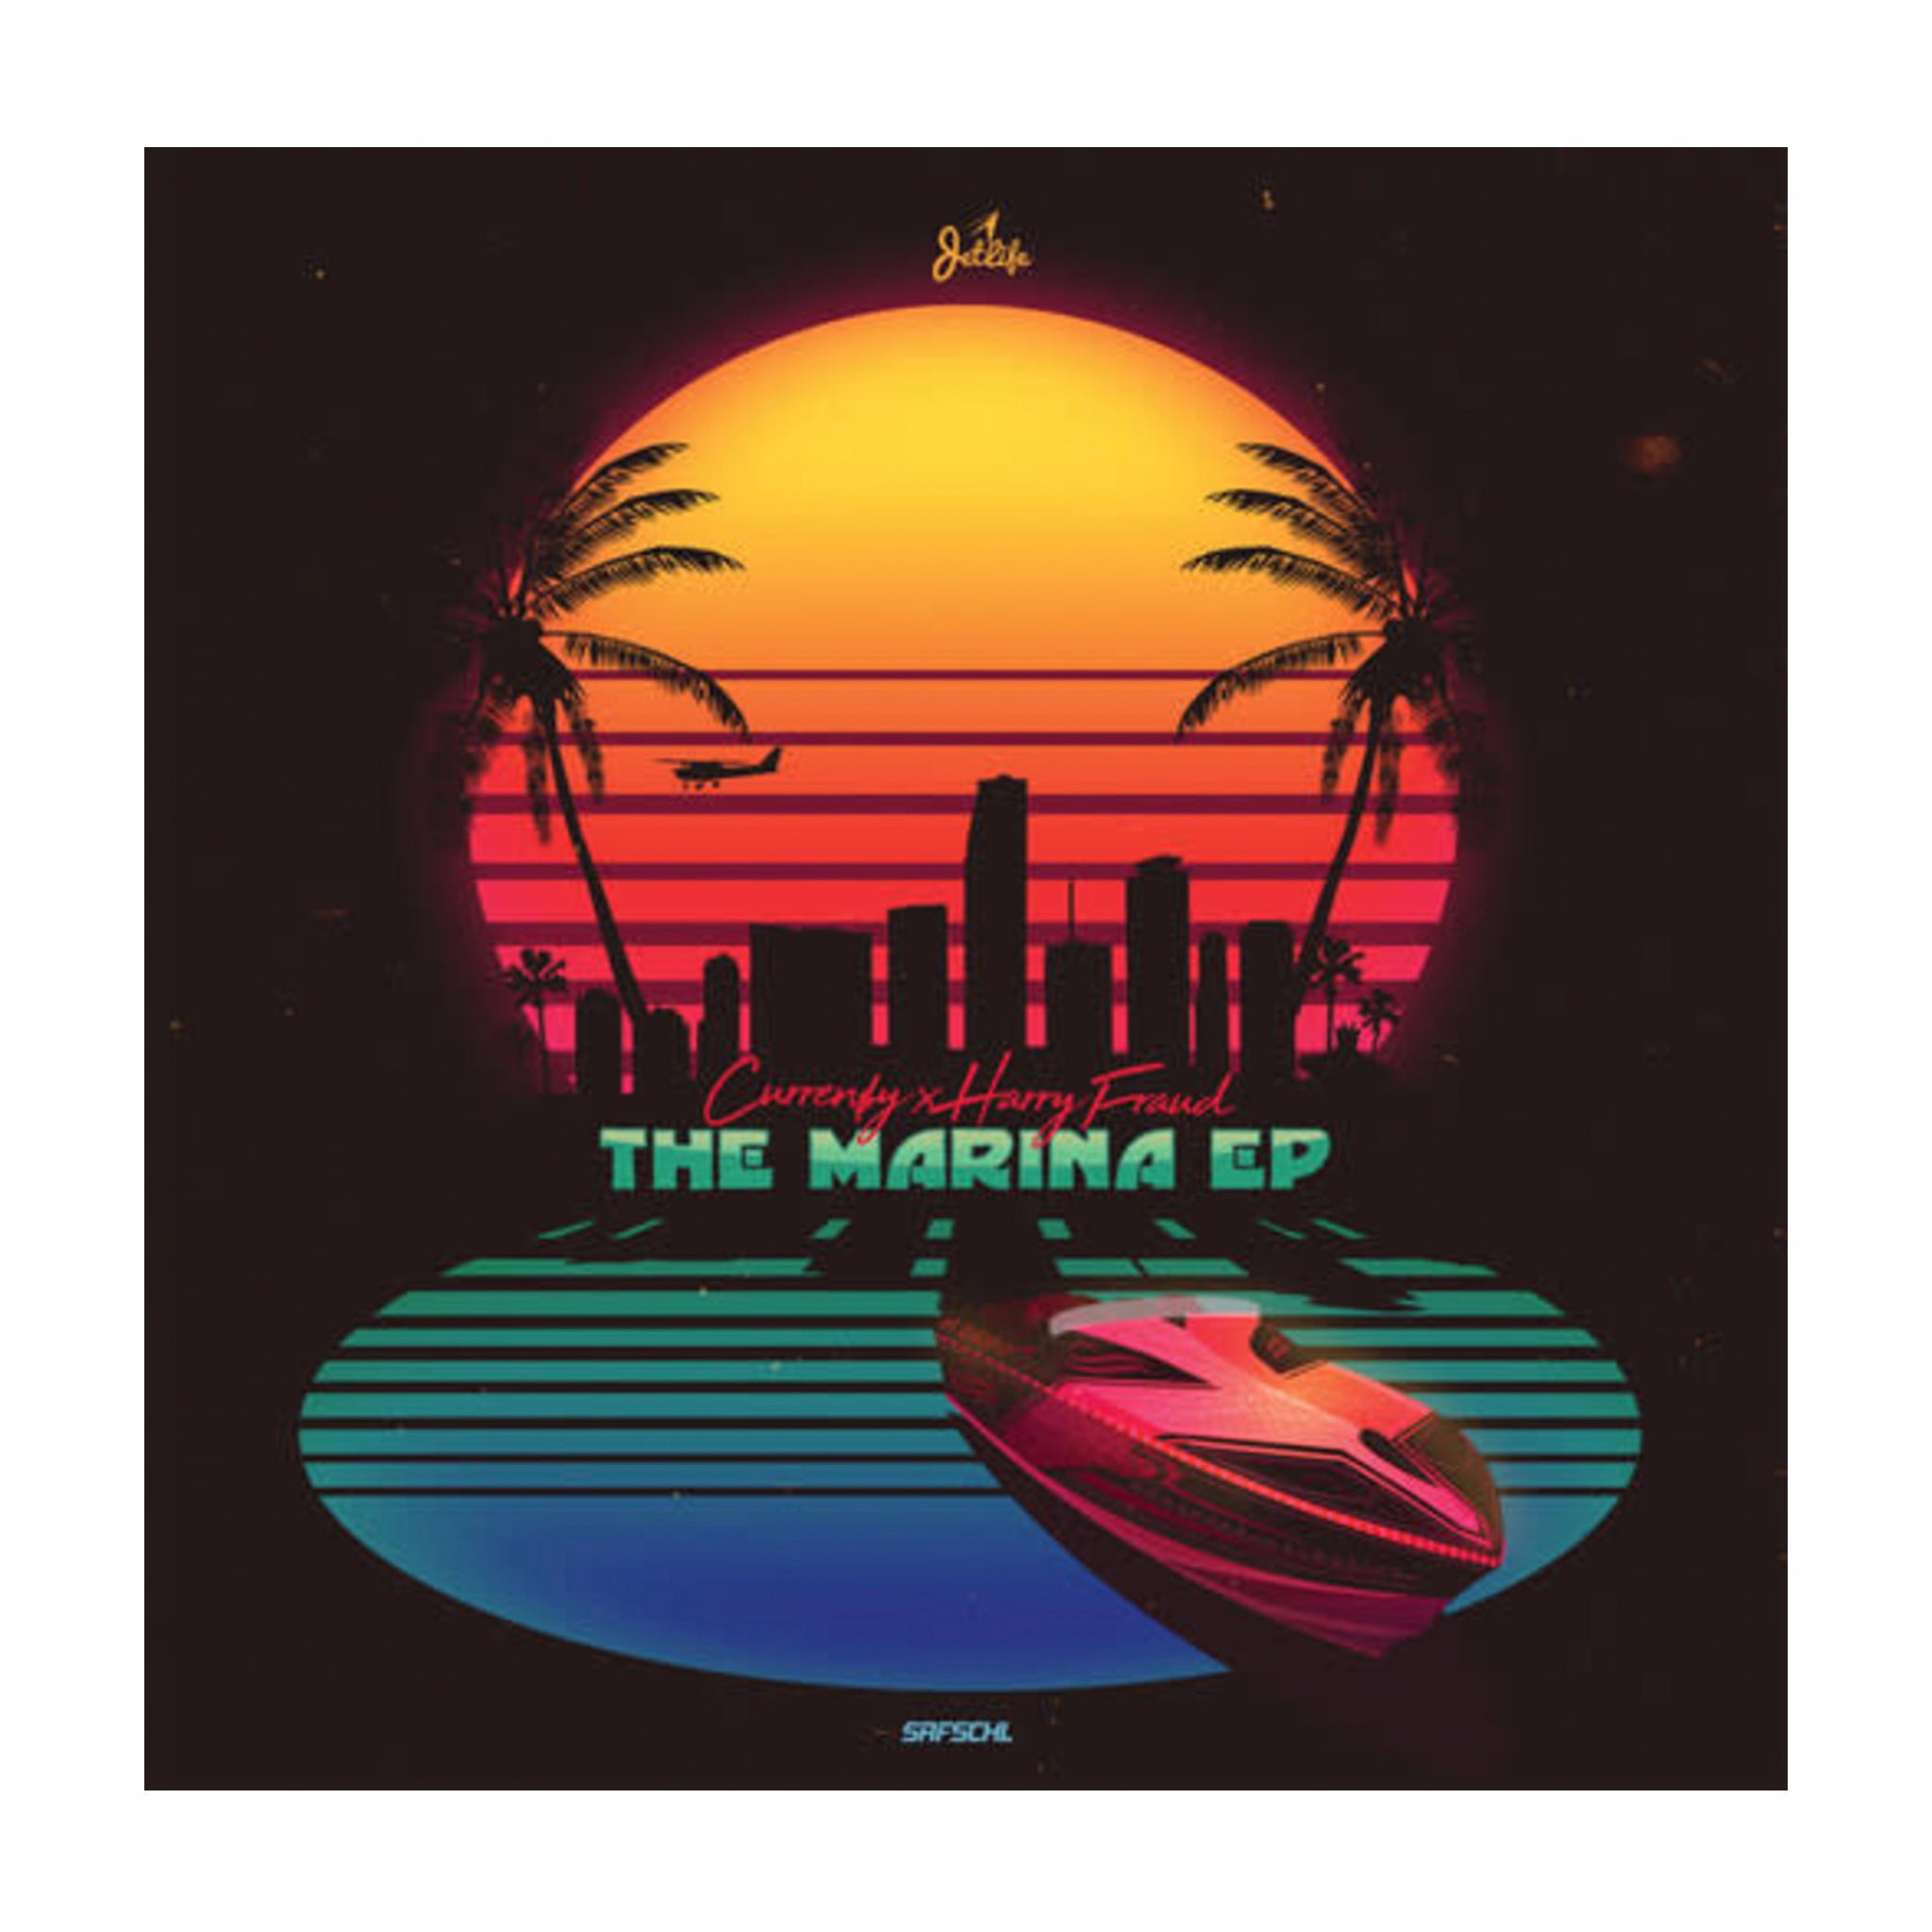 In vinile, Curren$y & Harry Fraud "La Marina" EP